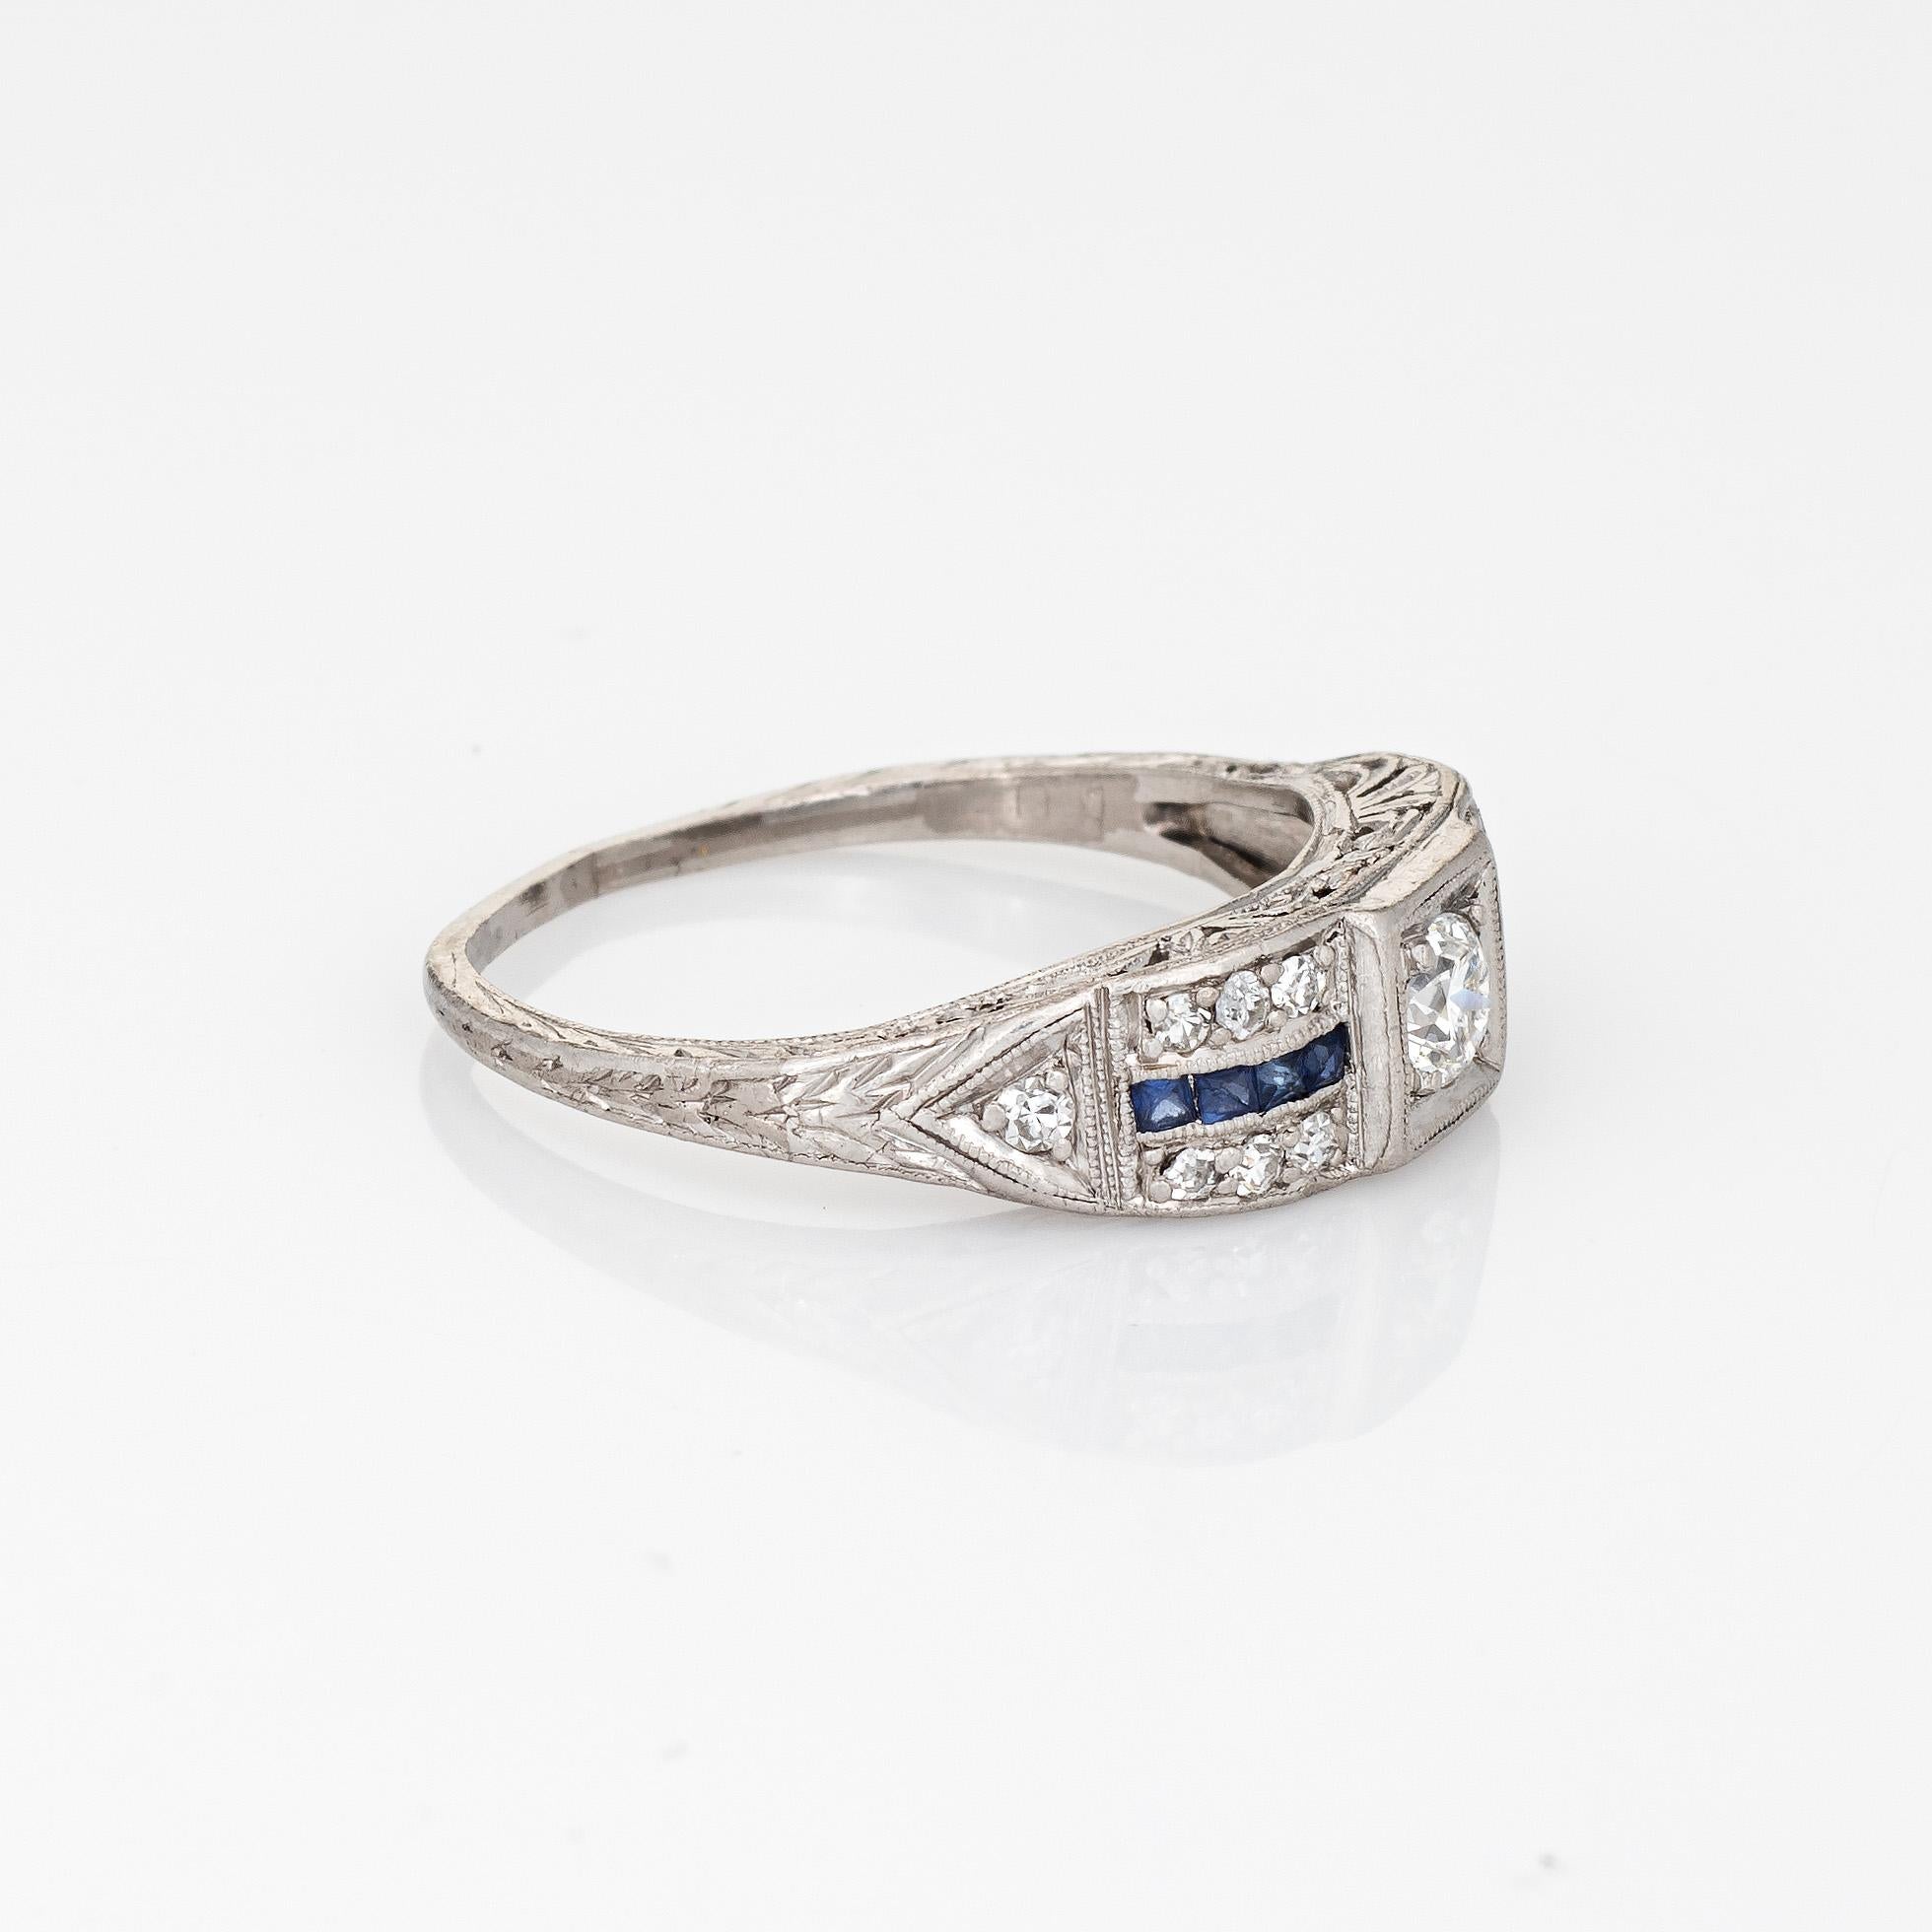 Old European Cut Vintage Art Deco Diamond Ring French Cut Sapphire Platinum Band Fine Jewelry